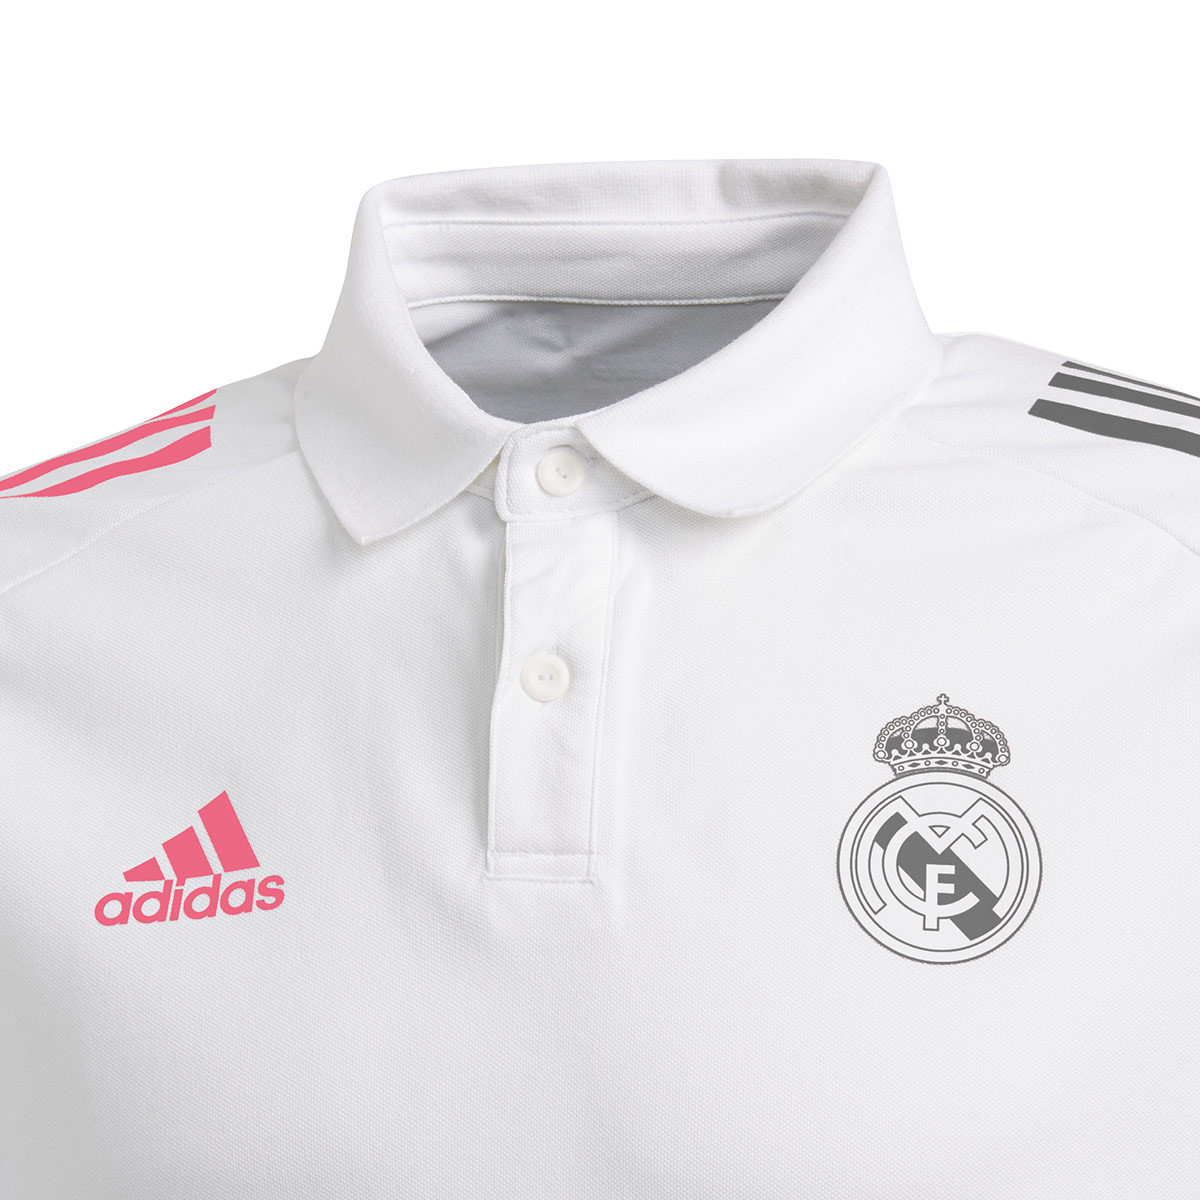 adidas Real Madrid 2020-2021 Polo shirt